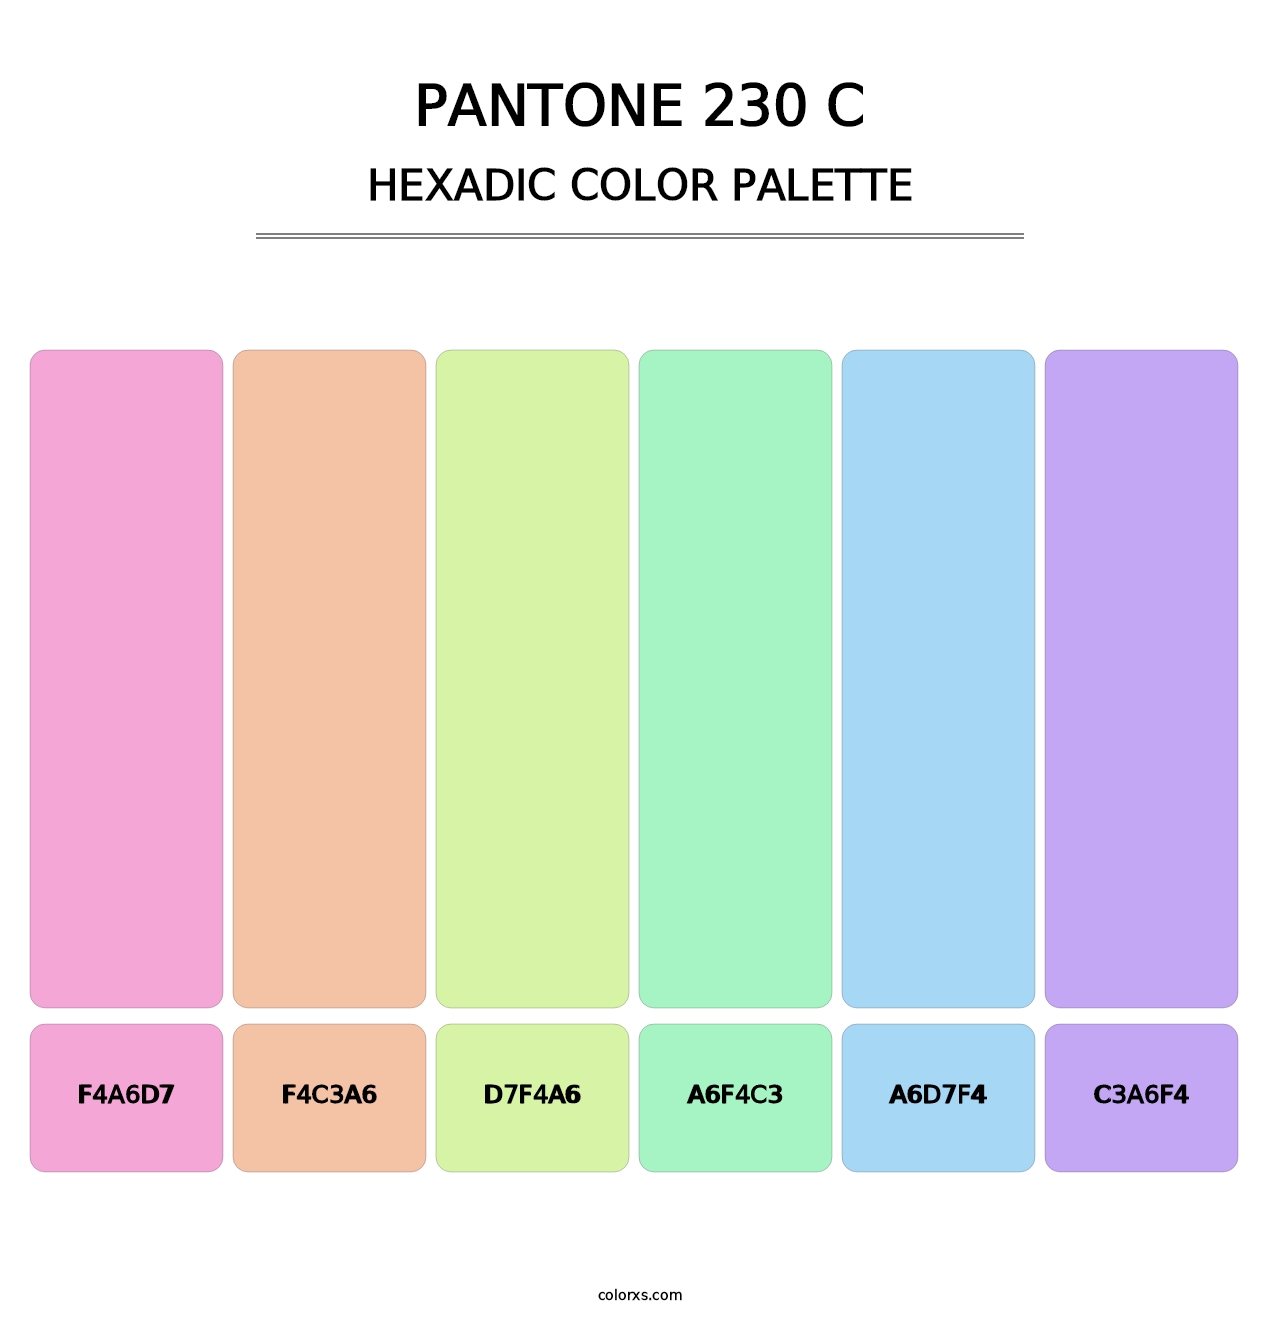 PANTONE 230 C - Hexadic Color Palette